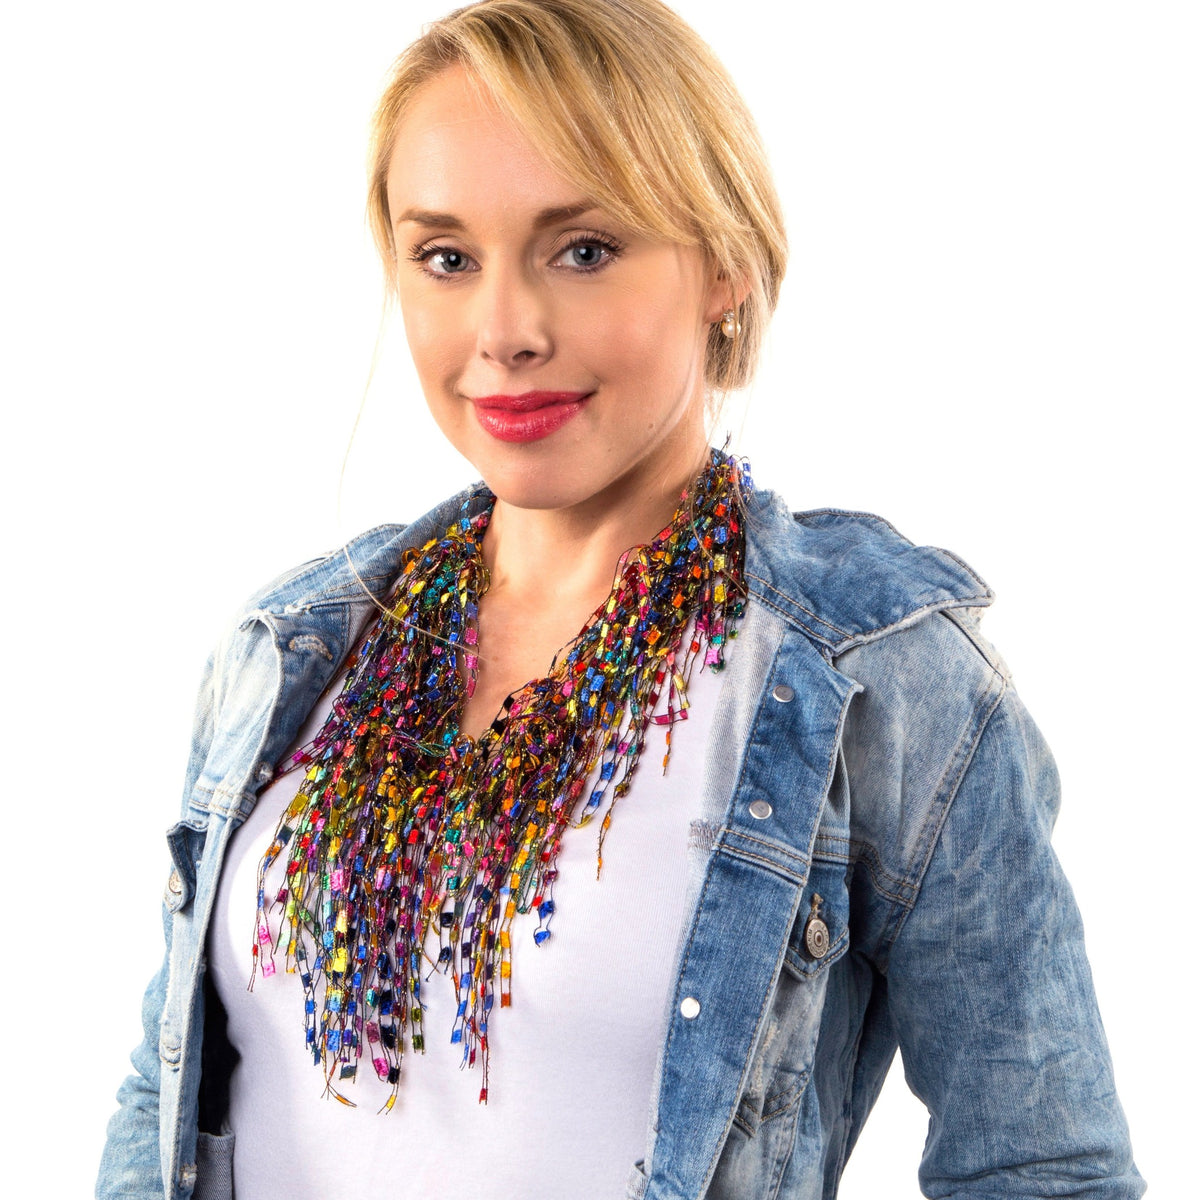 Handmade lightweight jewelry necklace scarf on a model wearing a jean jacket 